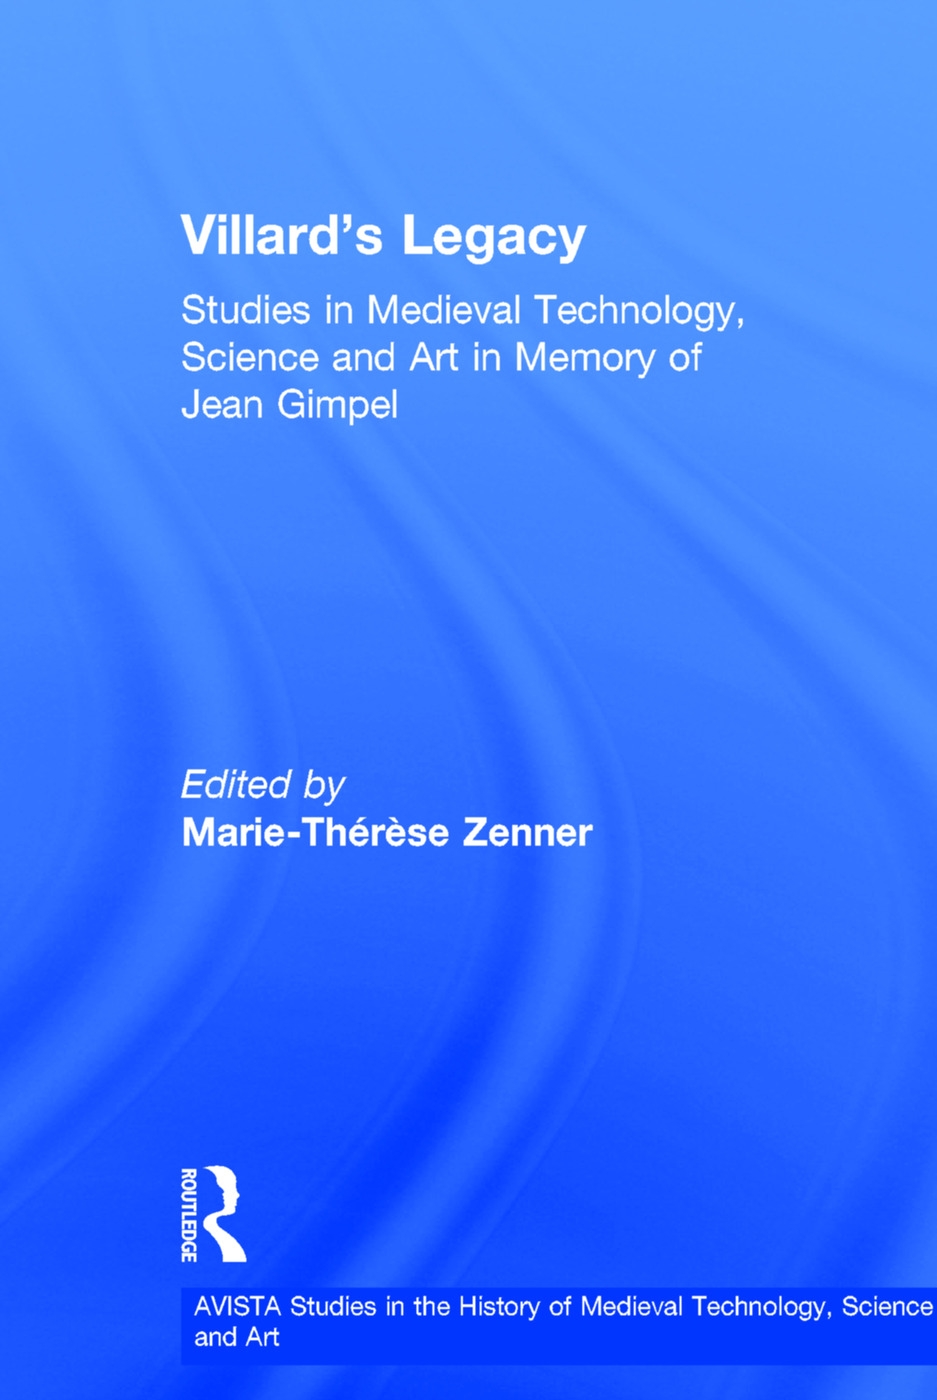 Villard’s Legacy: Studies in Medieval Technology, Science and Art in Memory of Jean Gimpel